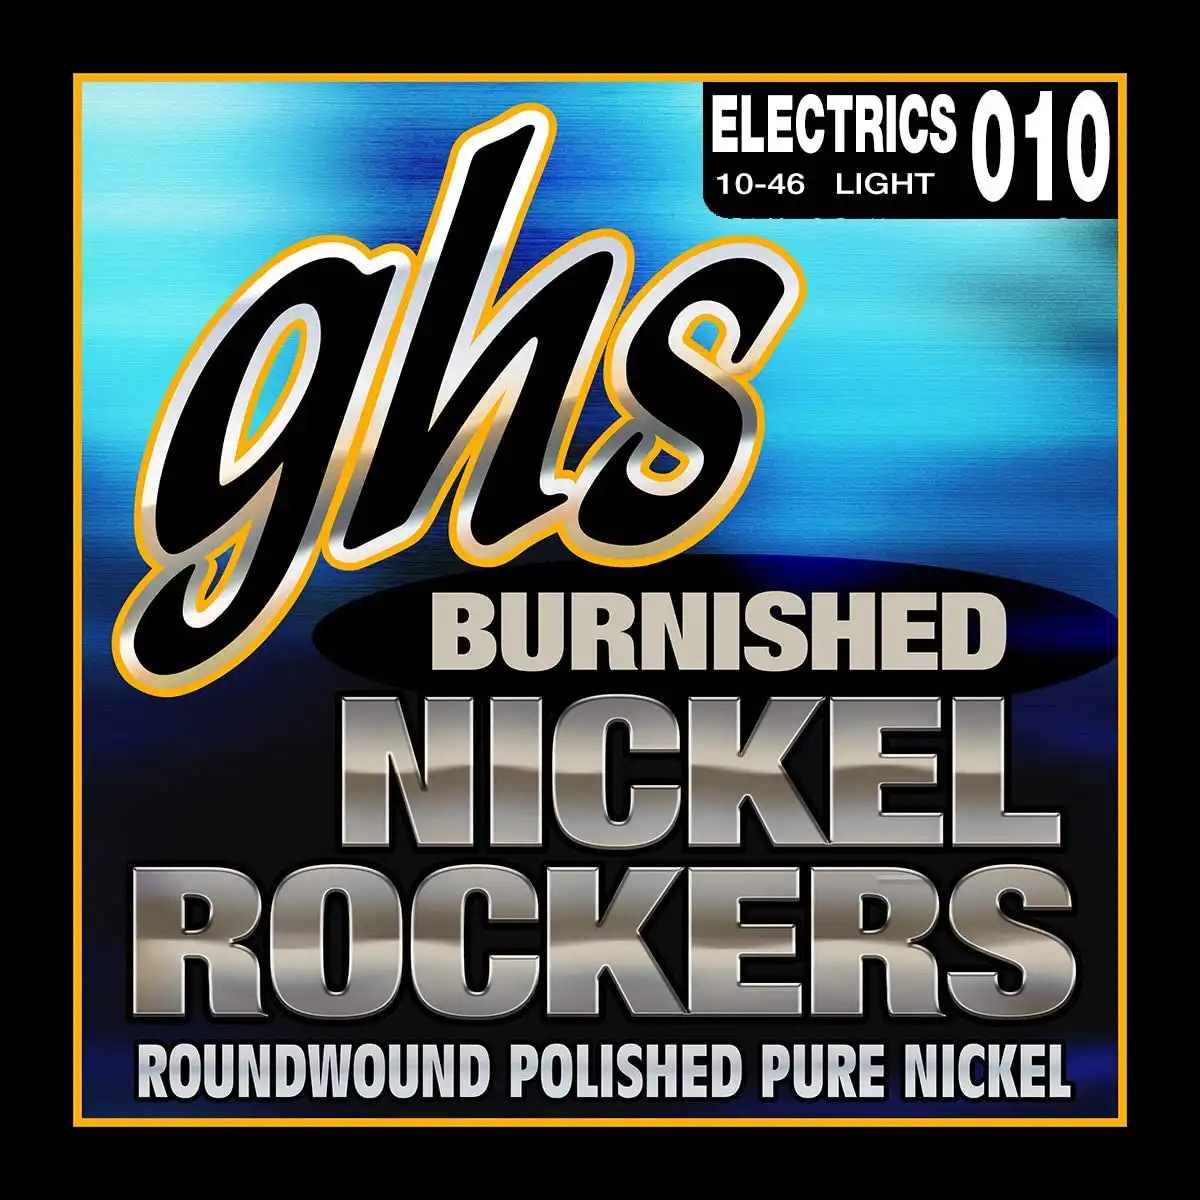 GHS BNR-L Burnished Nickel Rockers Light Roundwound Electric Guitar Strings (6-String Set, 10 - 46) - Žice za električnu gitaru